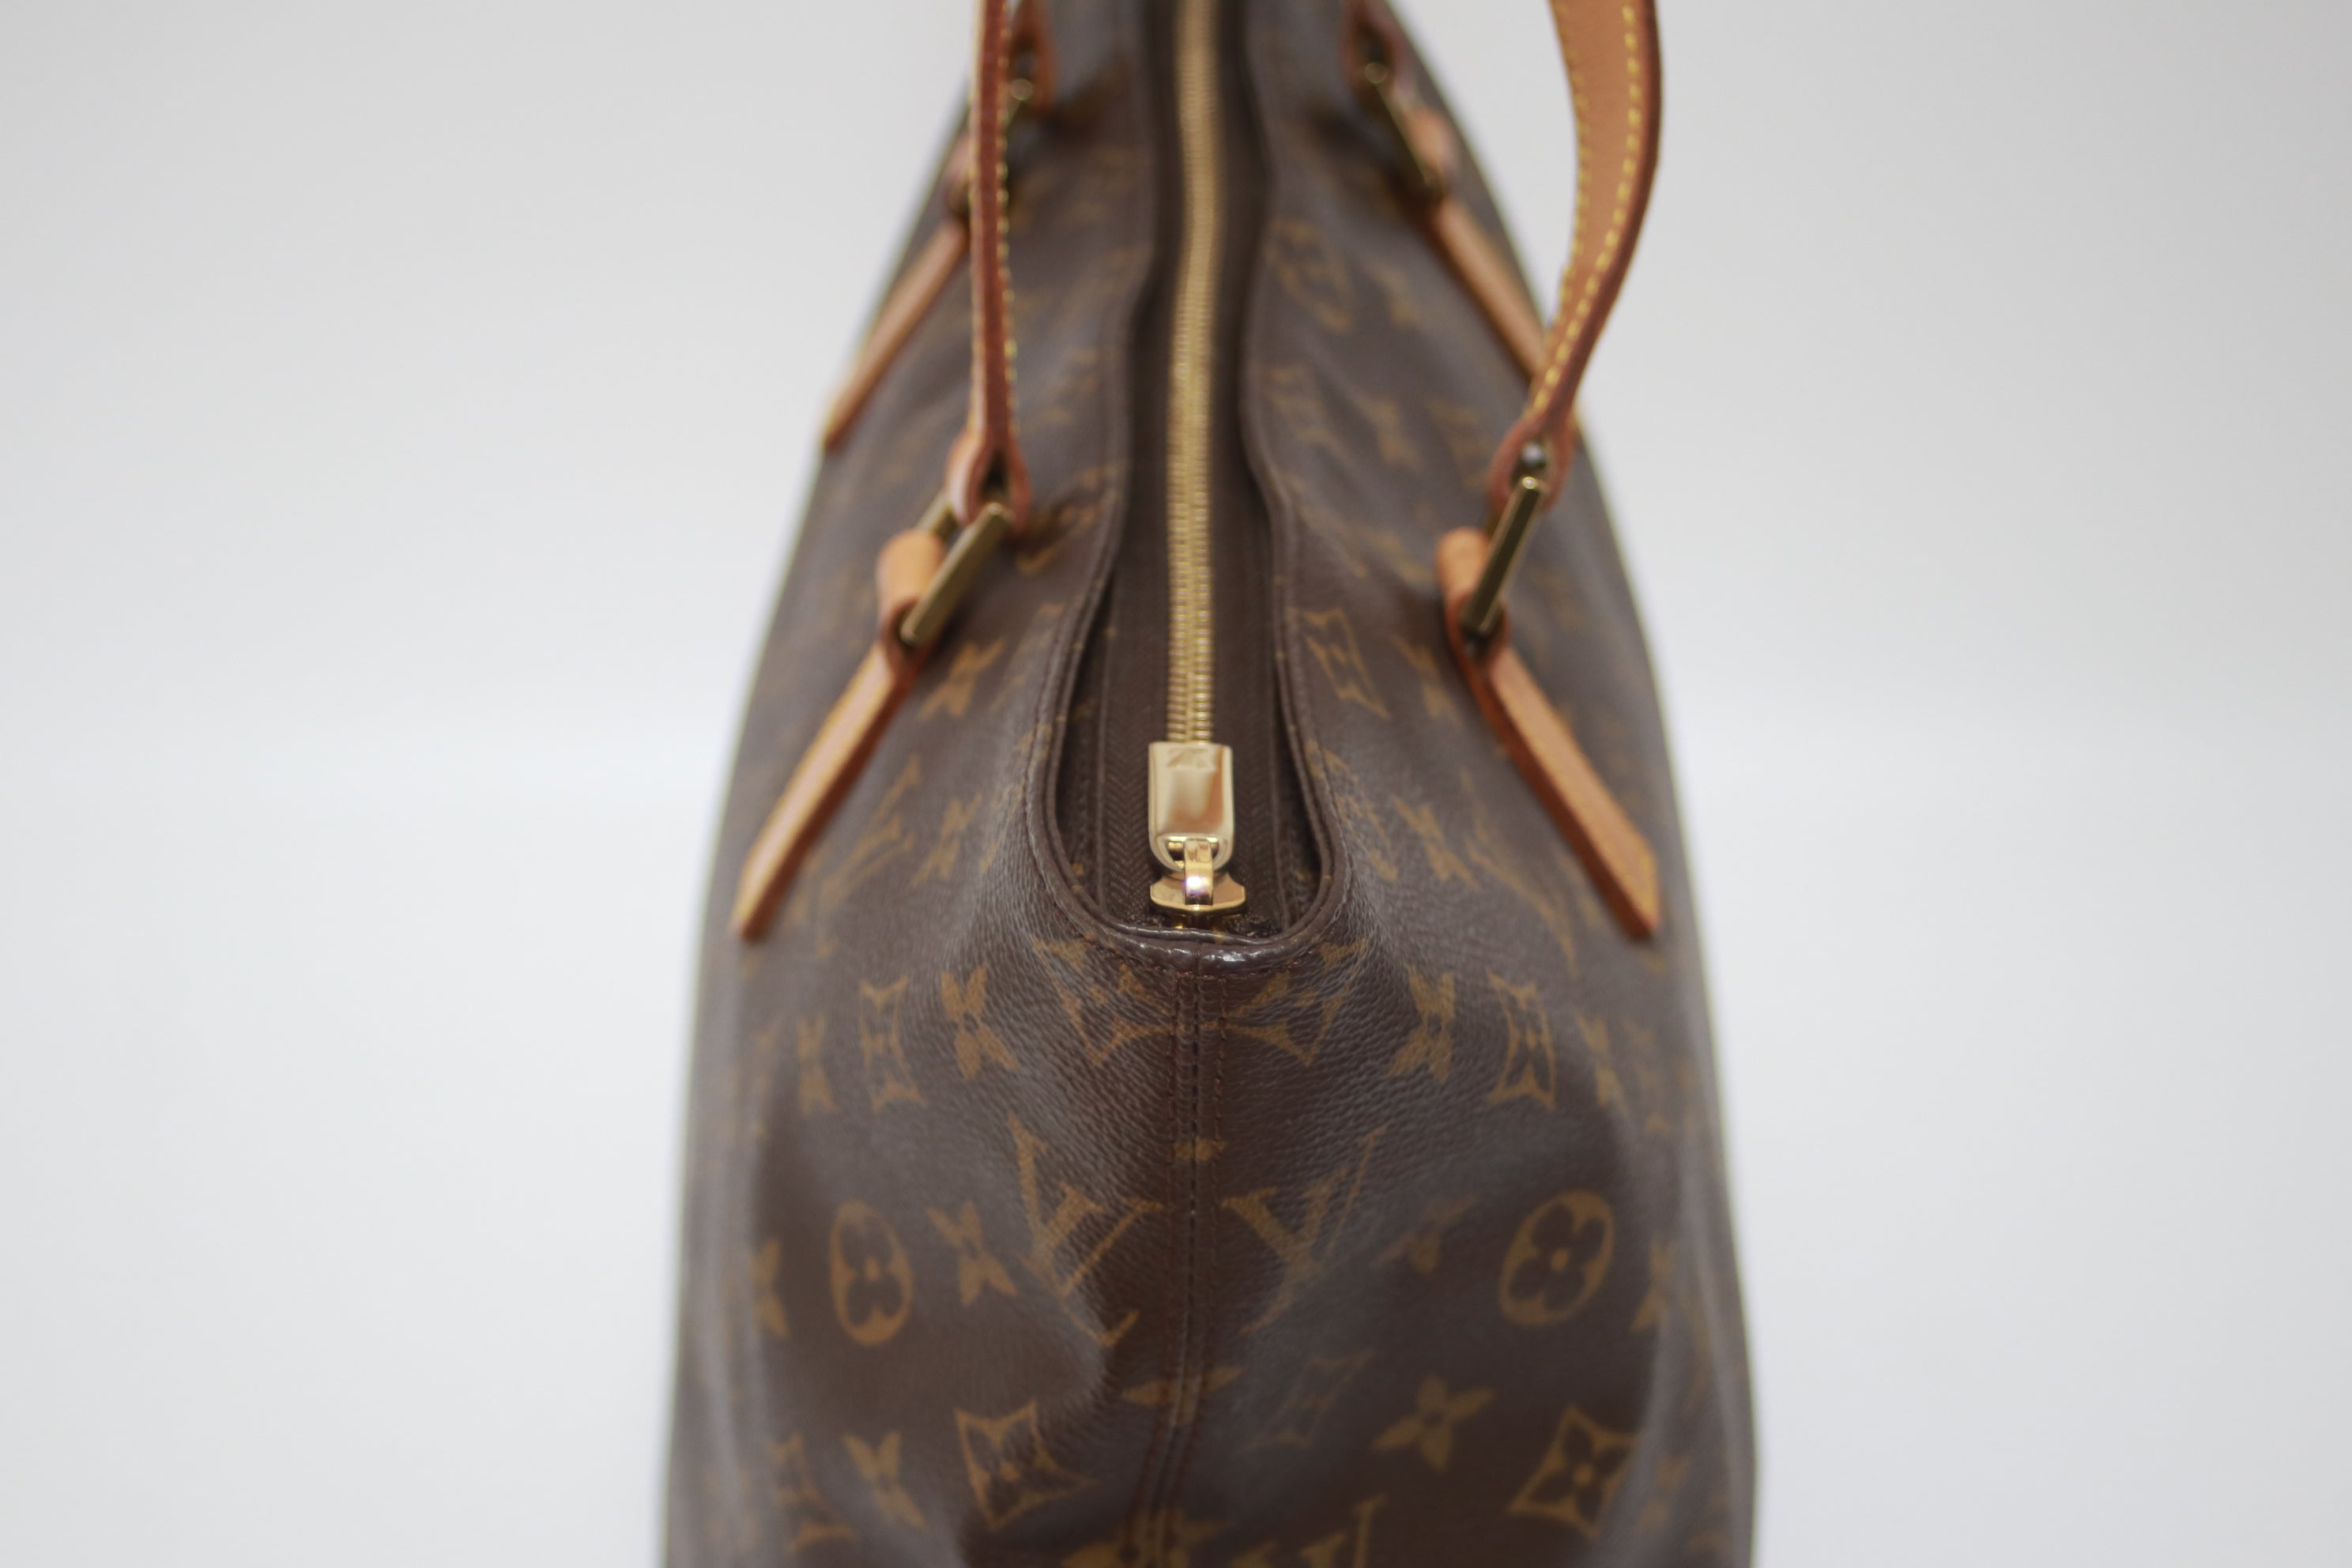 Louis Vuitton Monogram Keepall Bandouliere 60 Leather Brown Boston Bag 544